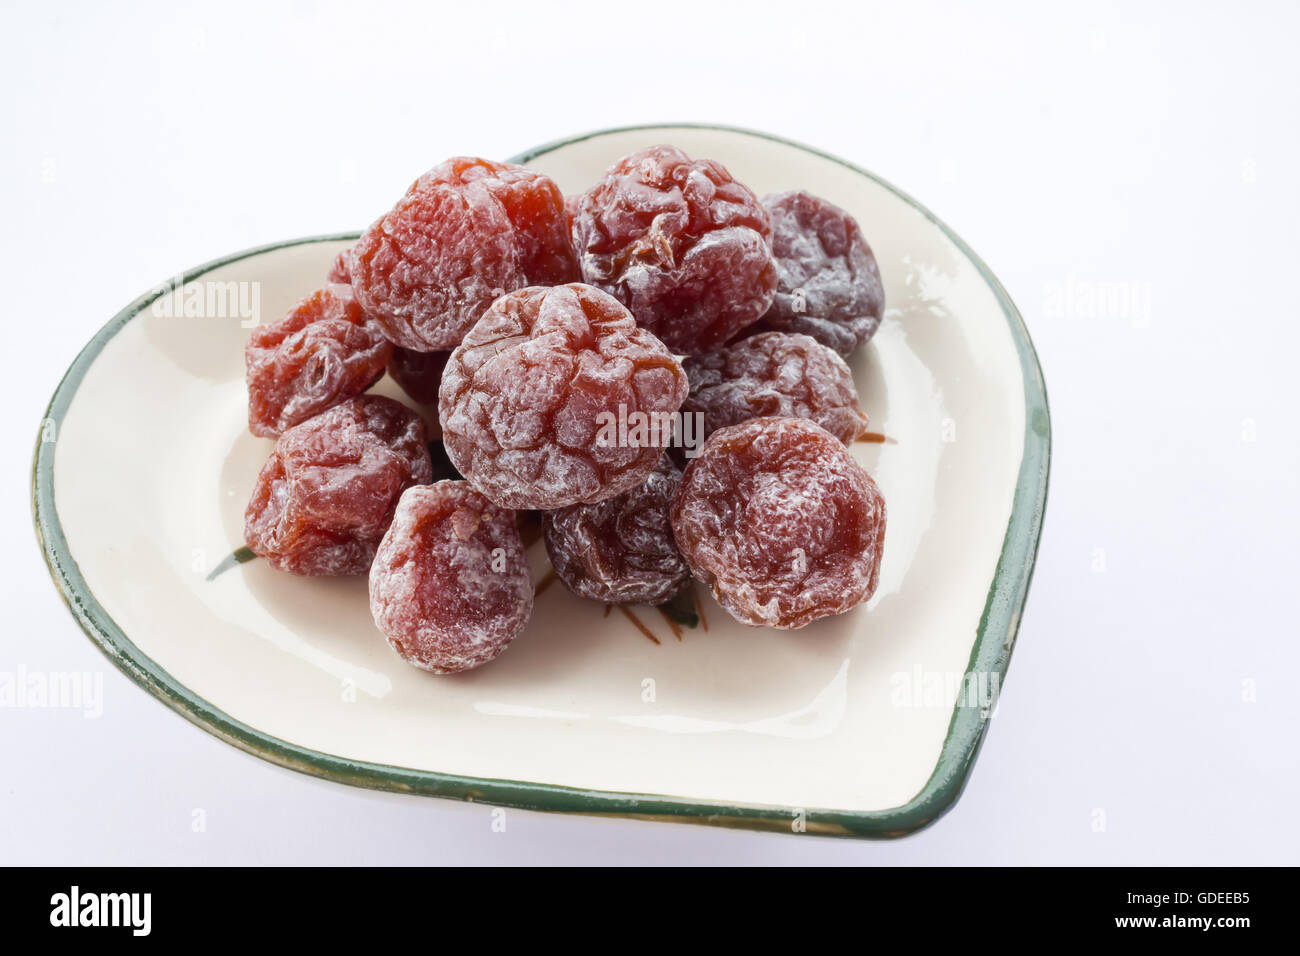 Sweet sieb reserve fruit, eat as dessert, on white background Stock Photo